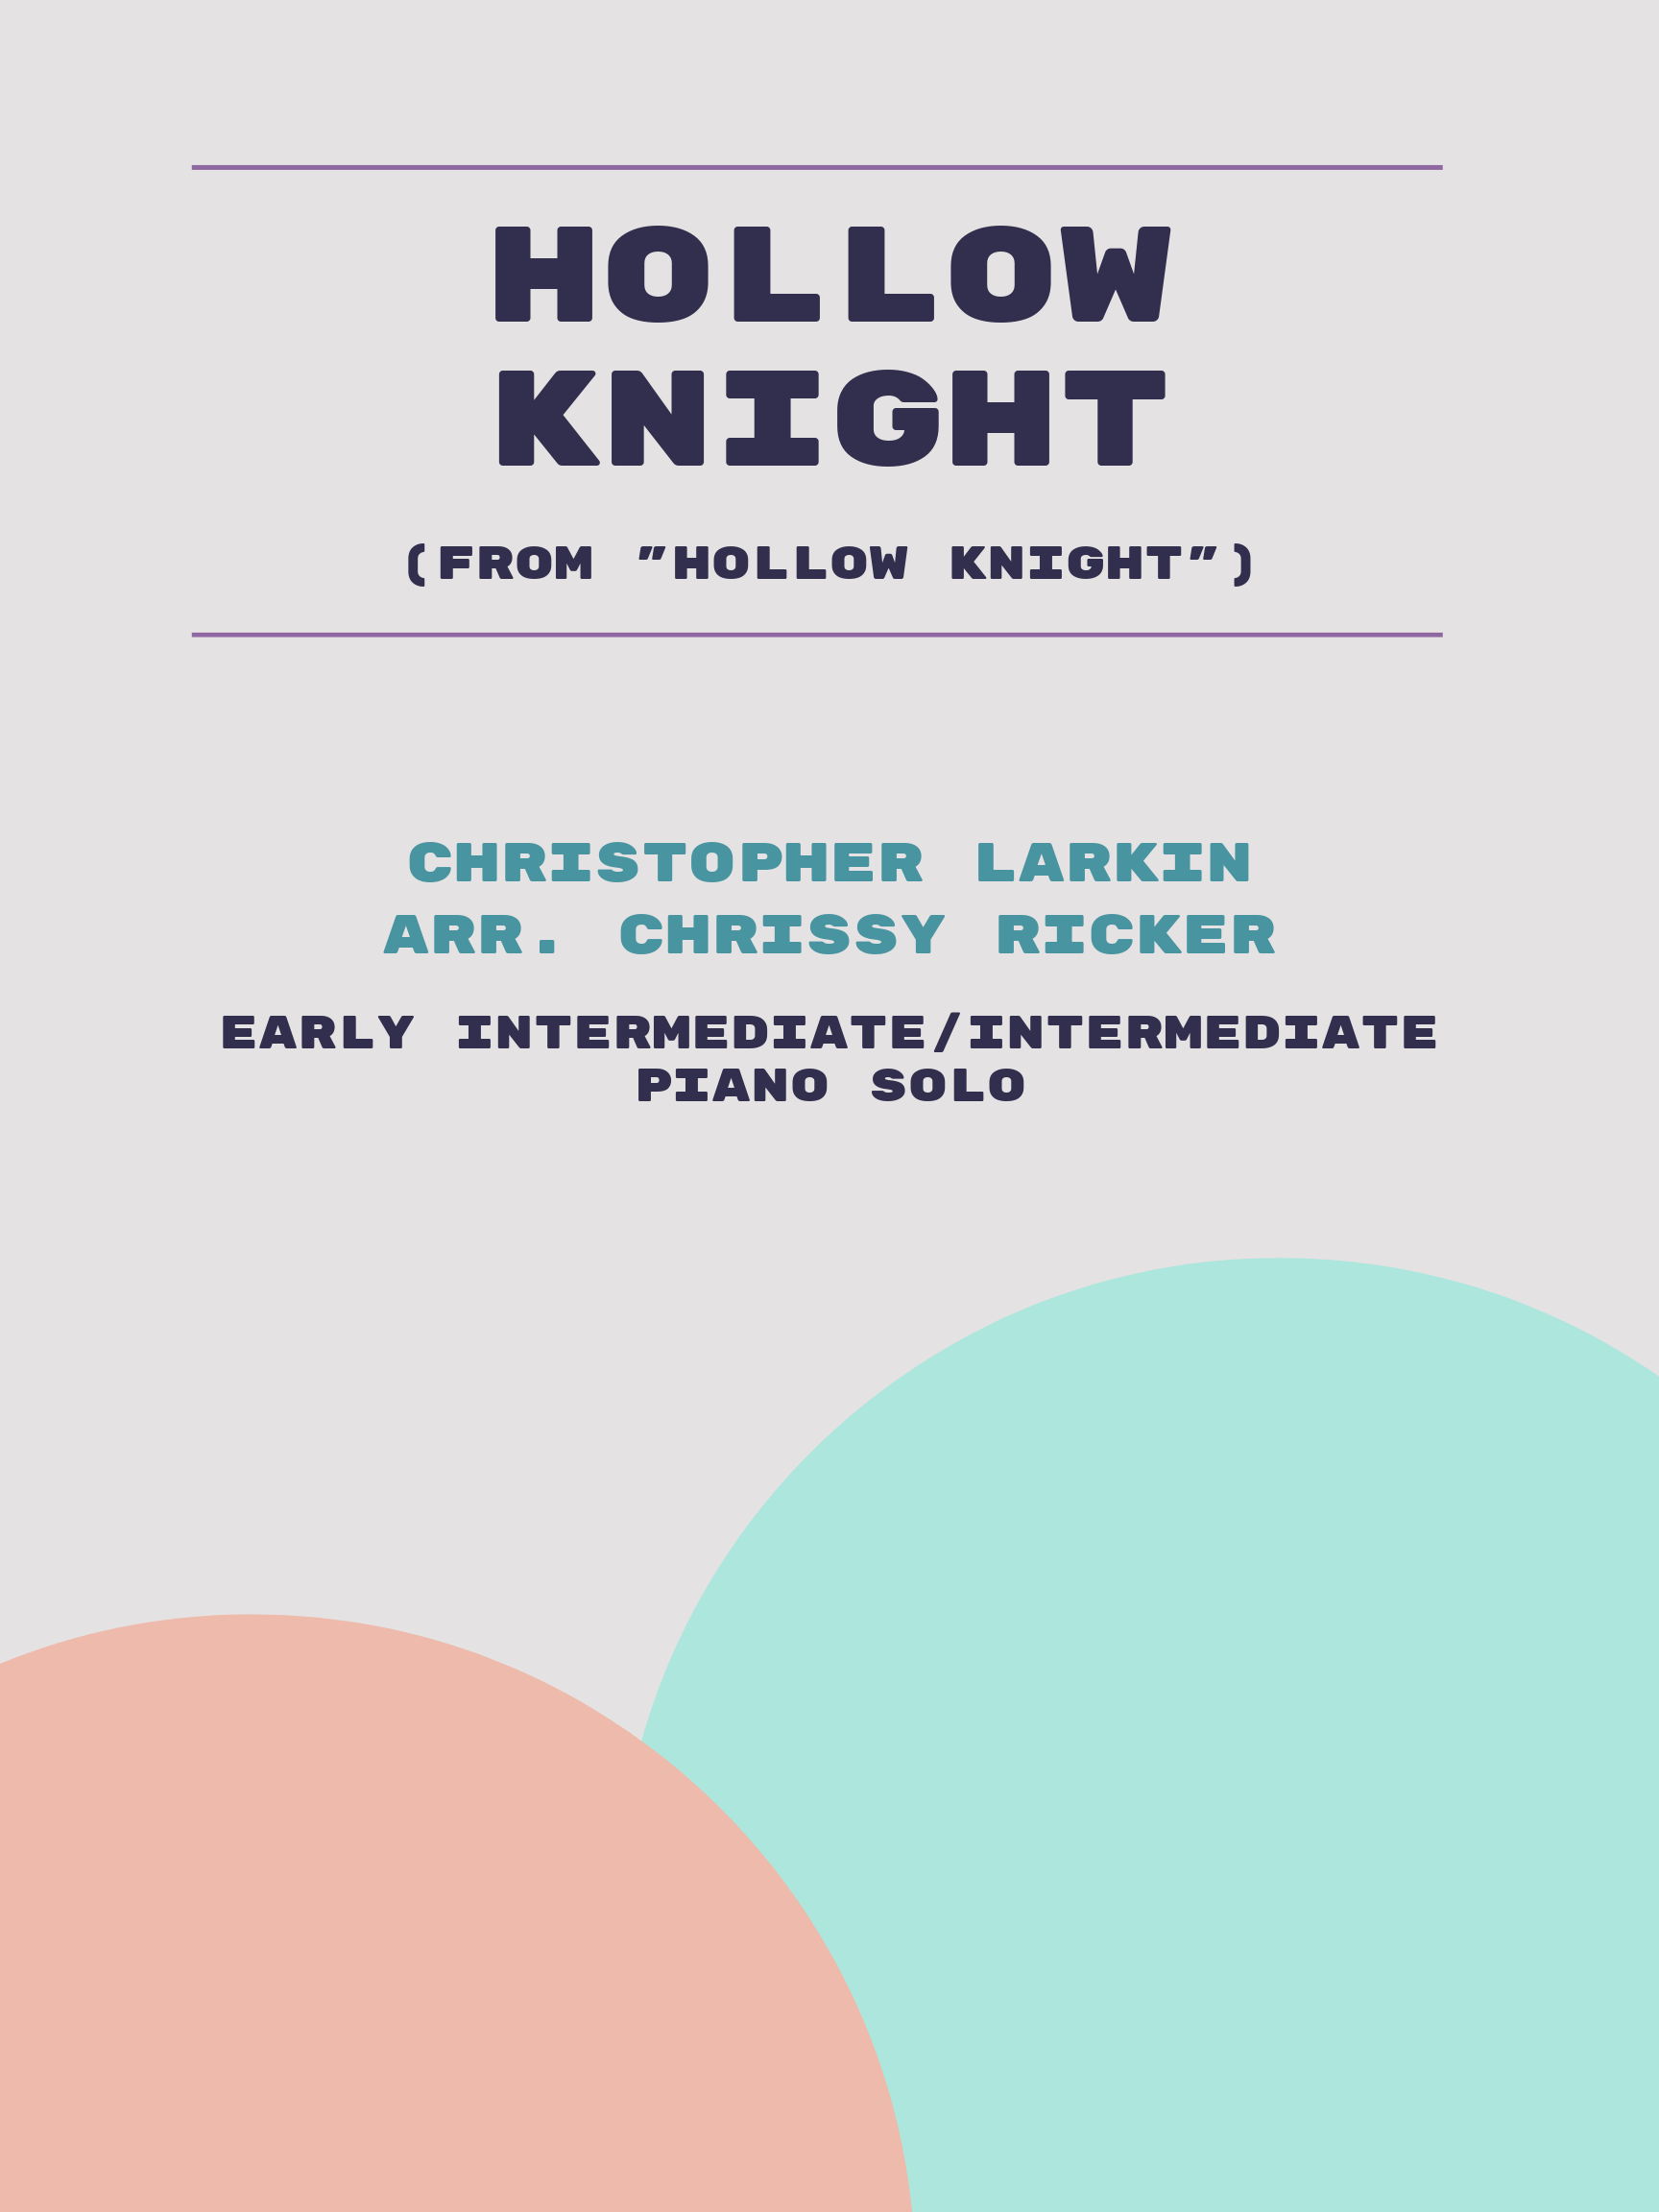 Hollow Knight by Christopher Larkin